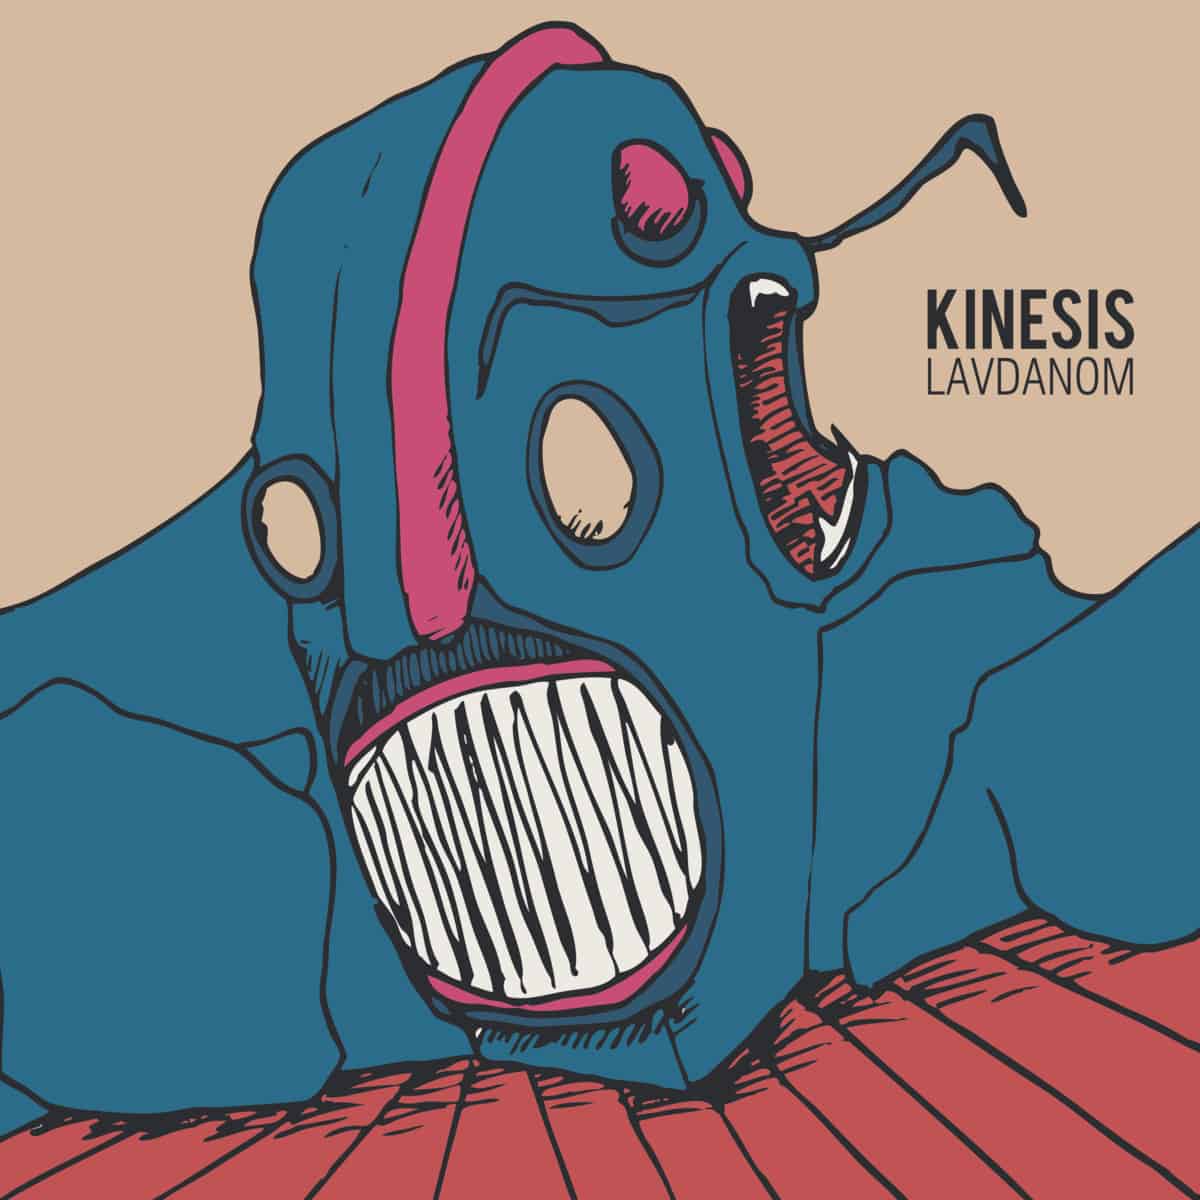 The cover of Kinesis's album Lavdanom.